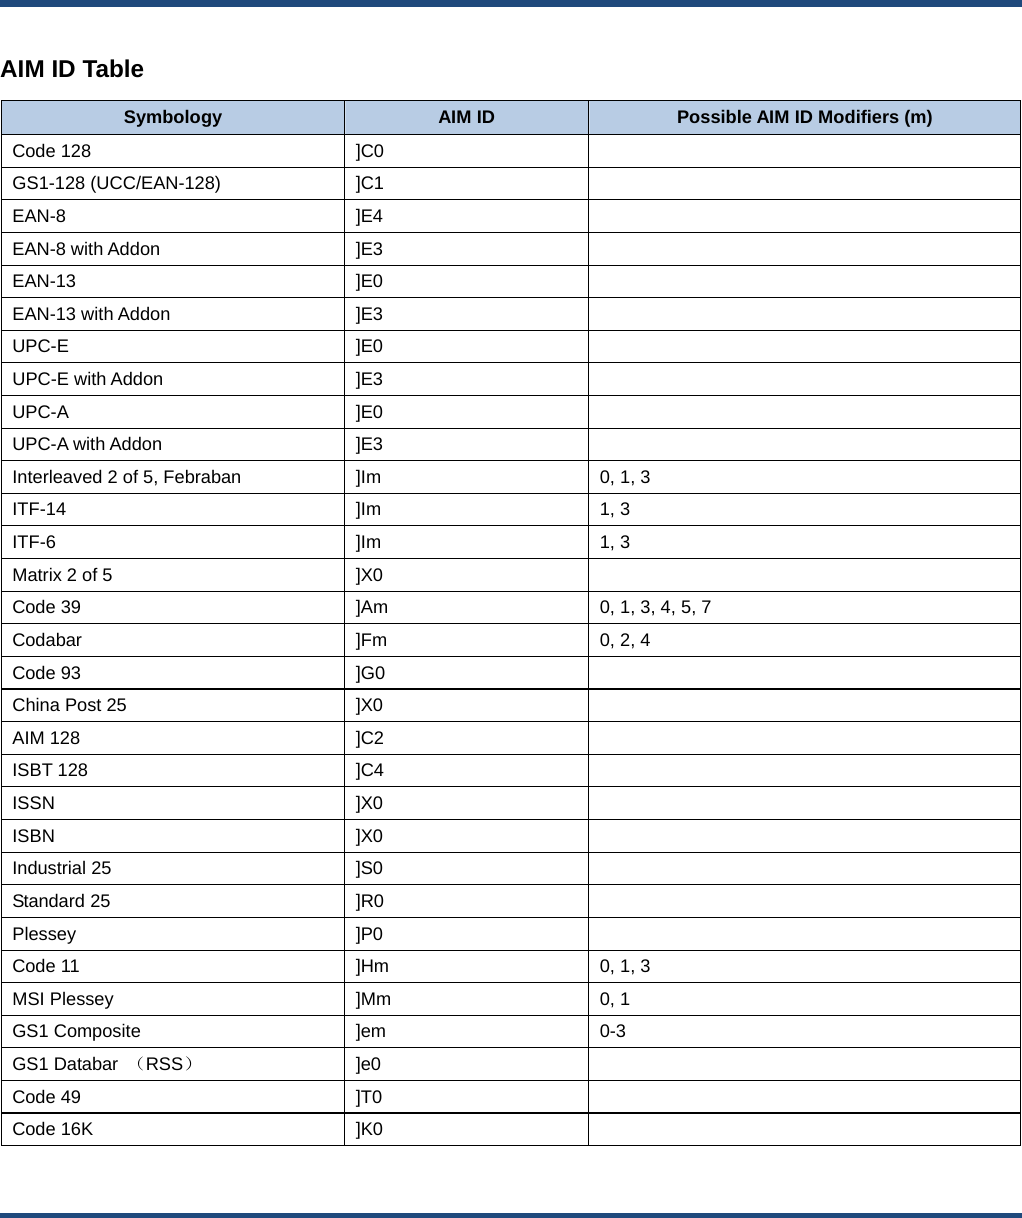                                                                                             AIM ID Table Symbology  AIM ID  Possible AIM ID Modifiers (m) Code 128  ]C0   GS1-128 (UCC/EAN-128)  ]C1   EAN-8  ]E4   EAN-8 with Addon  ]E3   EAN-13  ]E0   EAN-13 with Addon  ]E3   UPC-E  ]E0   UPC-E with Addon  ]E3   UPC-A  ]E0   UPC-A with Addon  ]E3   Interleaved 2 of 5, Febraban  ]Im  0, 1, 3 ITF-14  ]Im  1, 3 ITF-6  ]Im  1, 3 Matrix 2 of 5  ]X0   Code 39  ]Am  0, 1, 3, 4, 5, 7 Codabar  ]Fm  0, 2, 4 Code 93  ]G0   China Post 25  ]X0   AIM 128  ]C2   ISBT 128  ]C4   ISSN  ]X0   ISBN  ]X0   Industrial 25  ]S0   Standard 25  ]R0   Plessey  ]P0   Code 11  ]Hm  0, 1, 3 MSI Plessey  ]Mm  0, 1 GS1 Composite  ]em  0-3 GS1 Databar  （RSS） ]e0   Code 49  ]T0   Code 16K  ]K0   